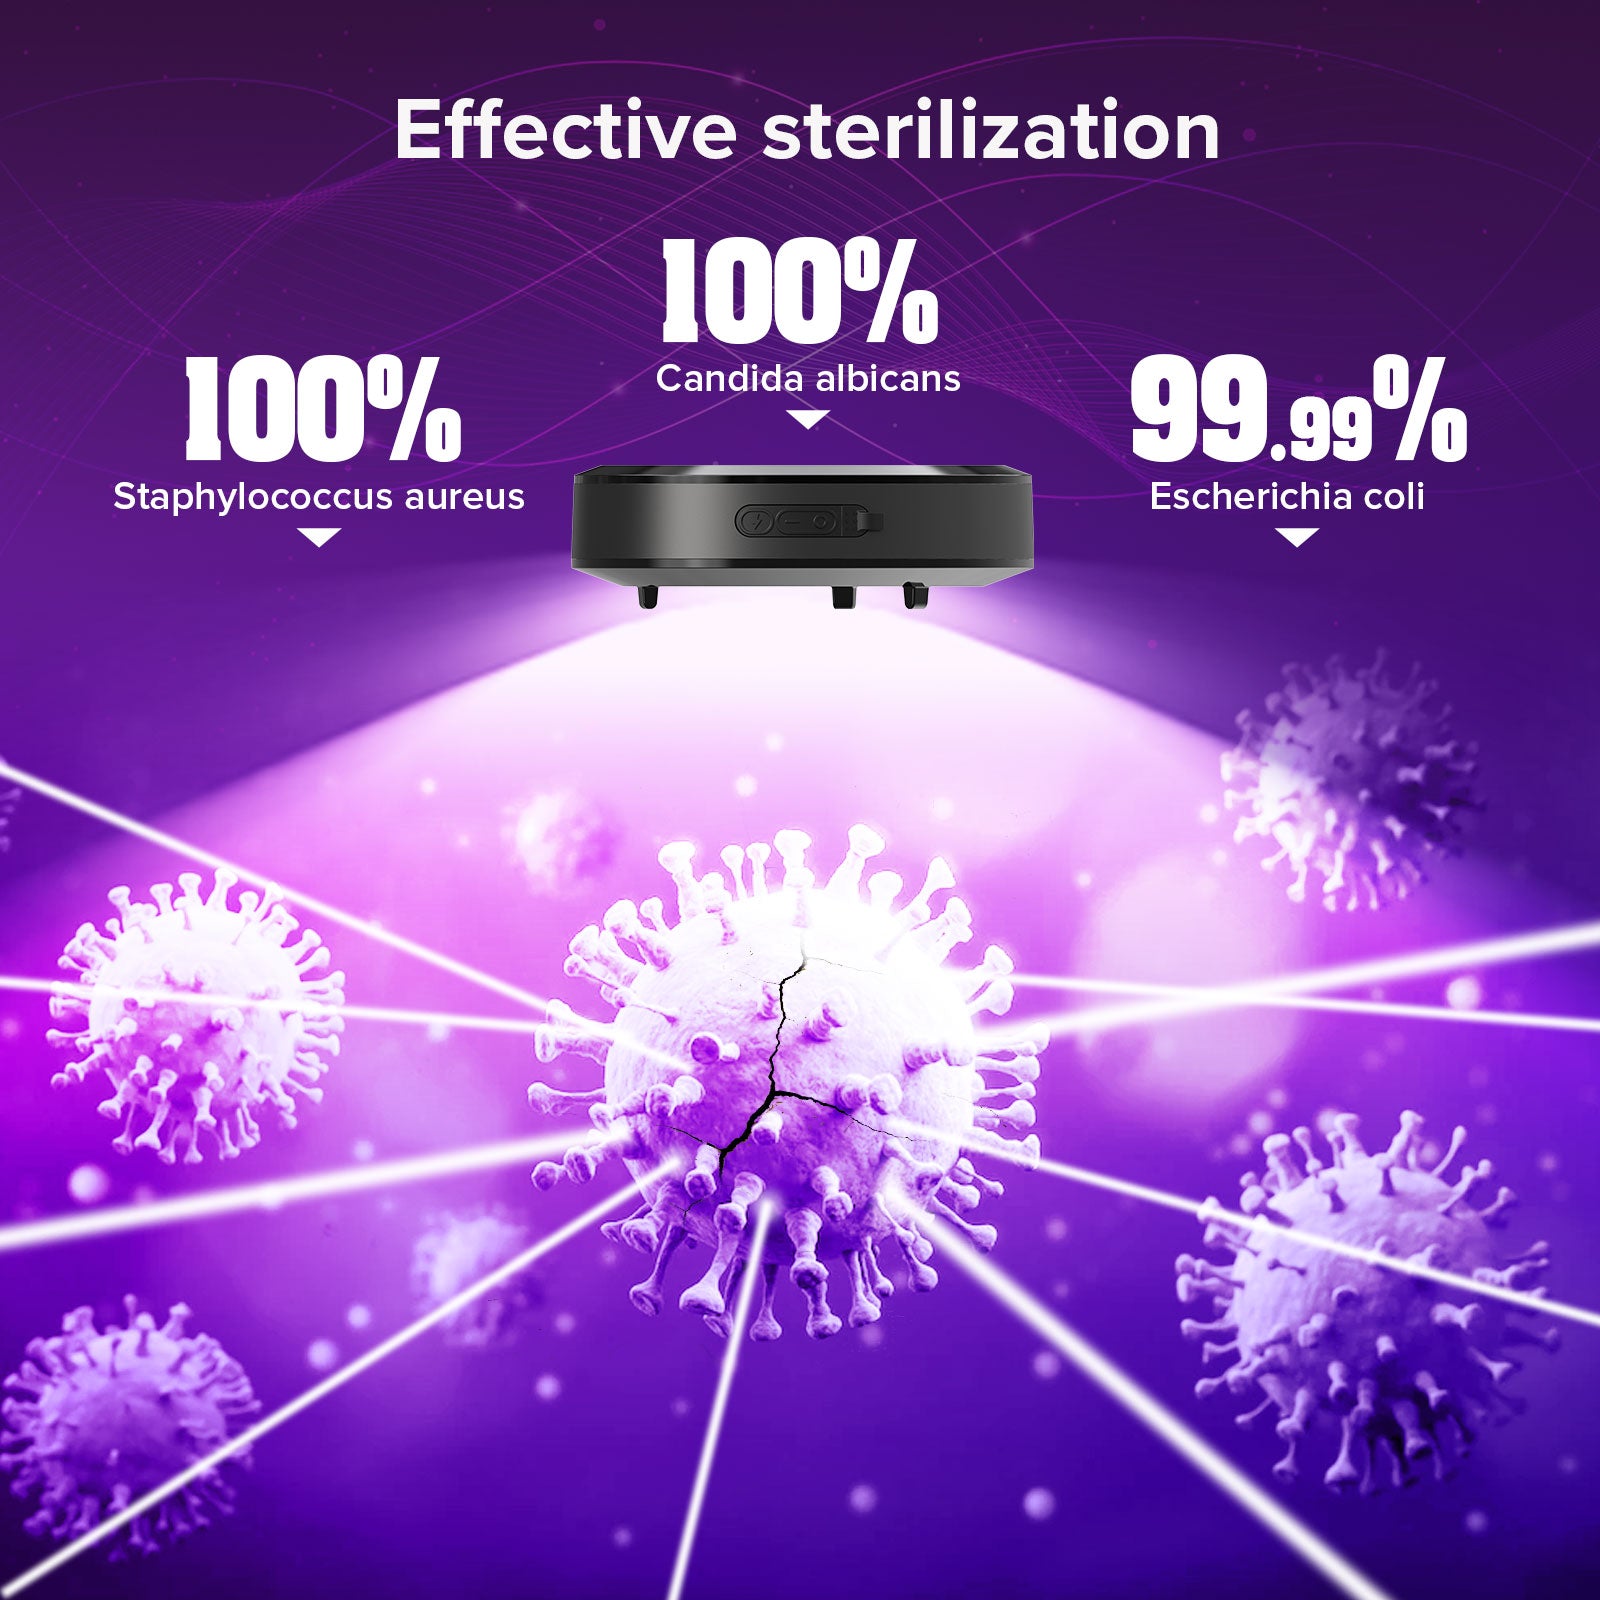 Portable UV Hand Light with effective sterilization, 100% staphylococcus aureus, 100% candida albicans, 99.99% escherichia coil